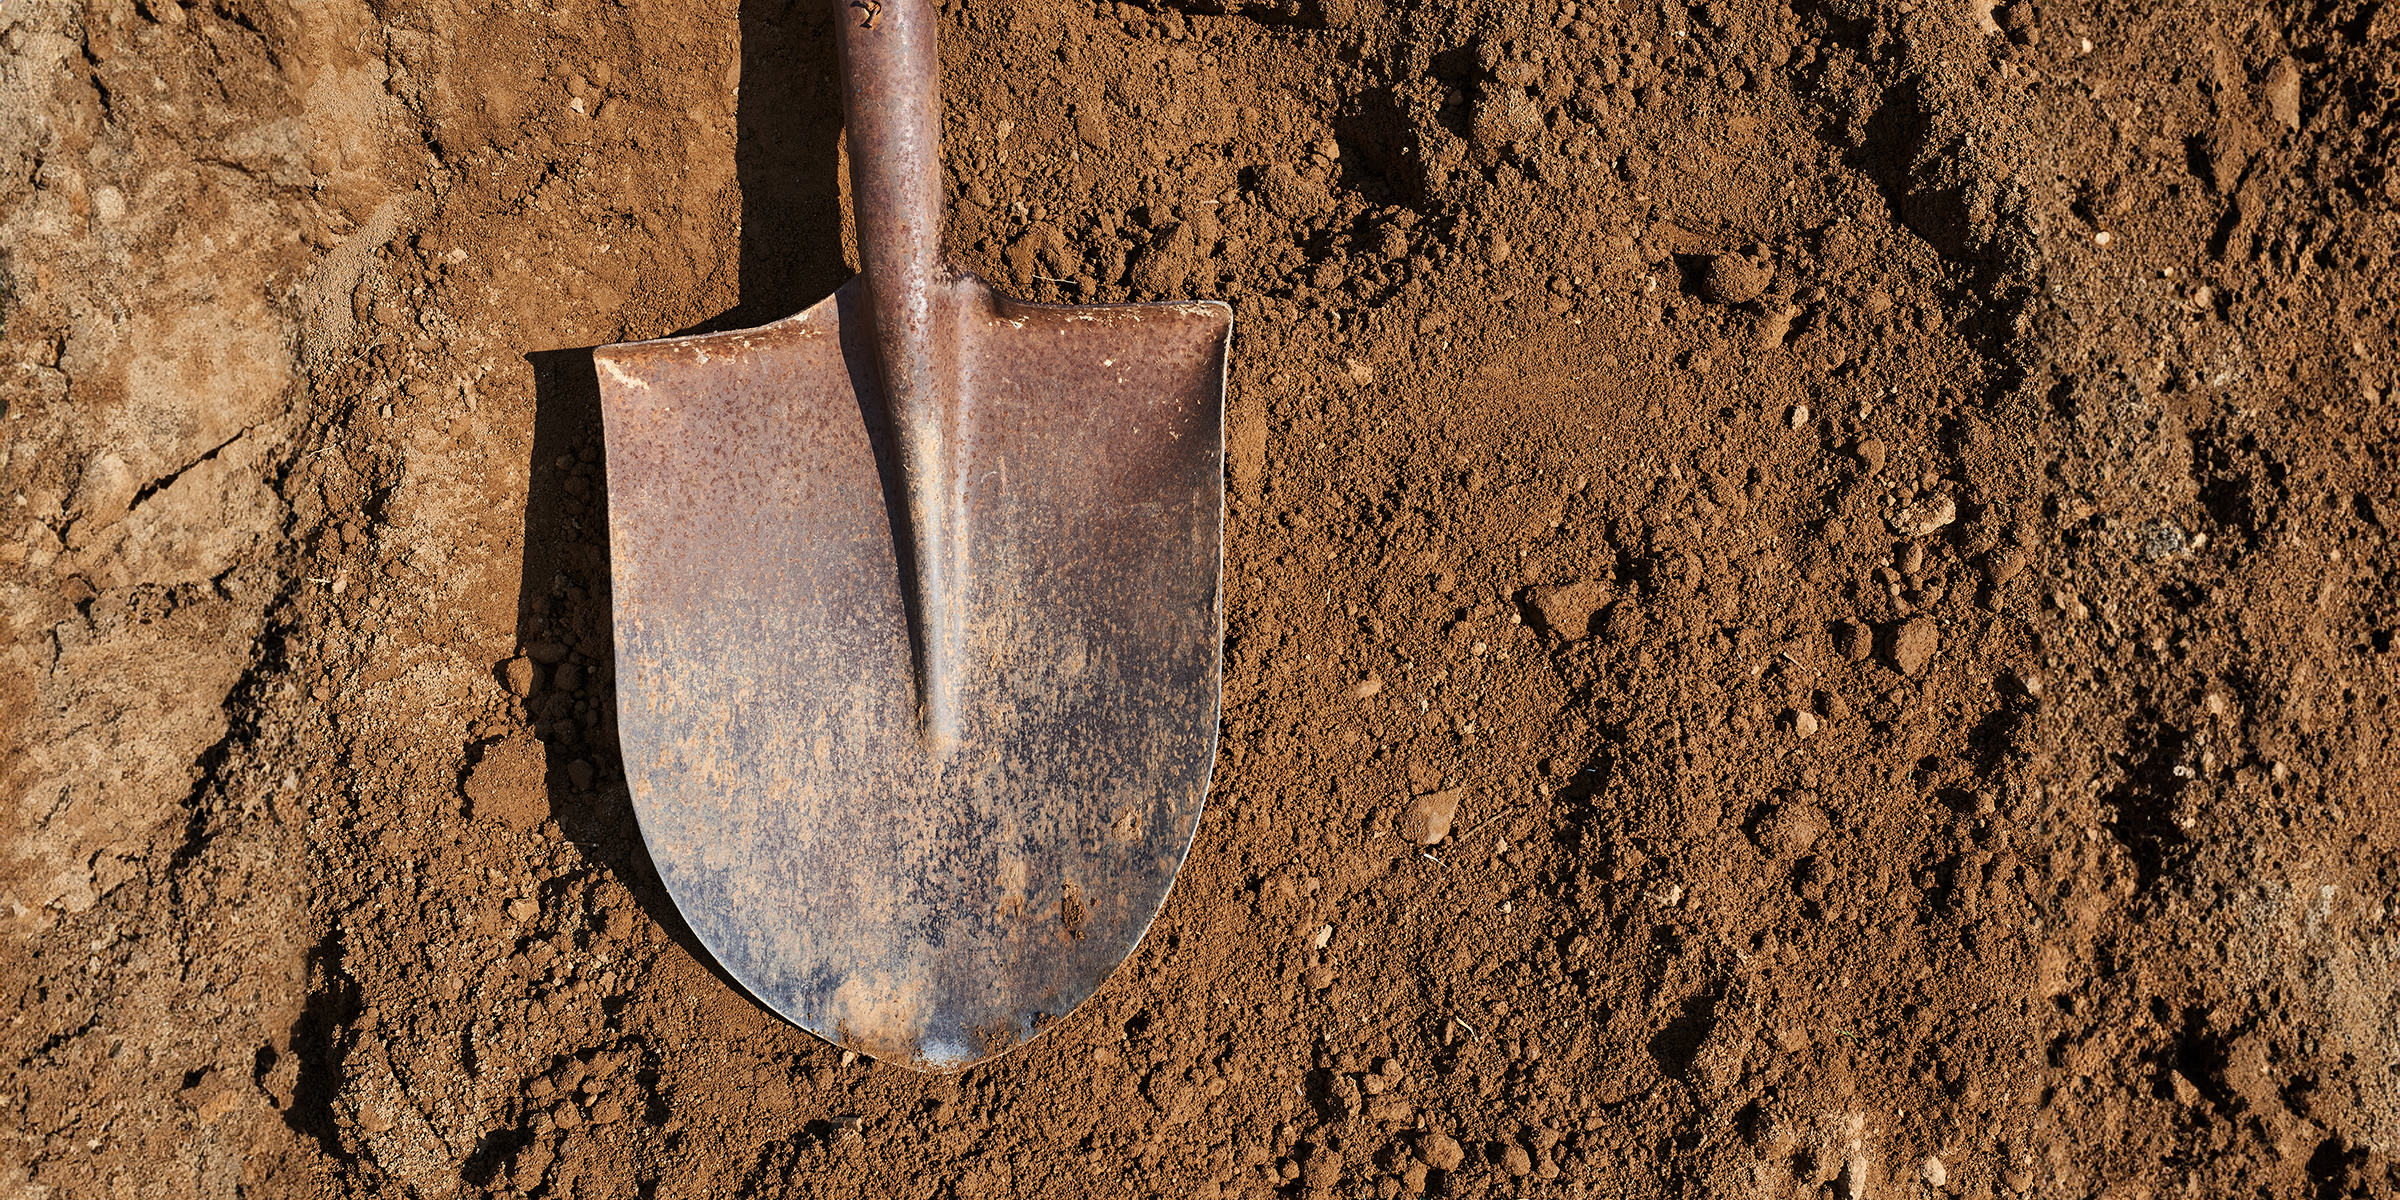 A shovel lying in dirt | Source: Shutterstock